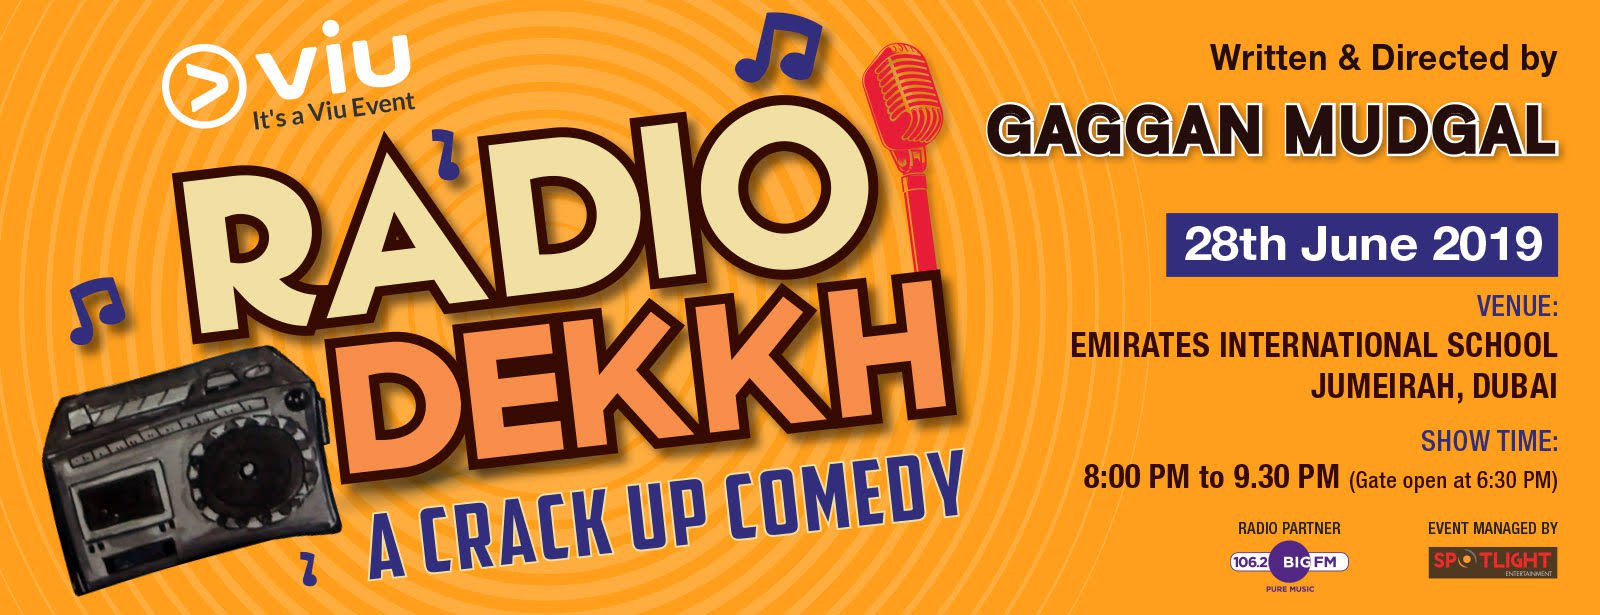 Radio Dekkh Comedy Show with Gaggan Mudgal - Coming Soon in UAE